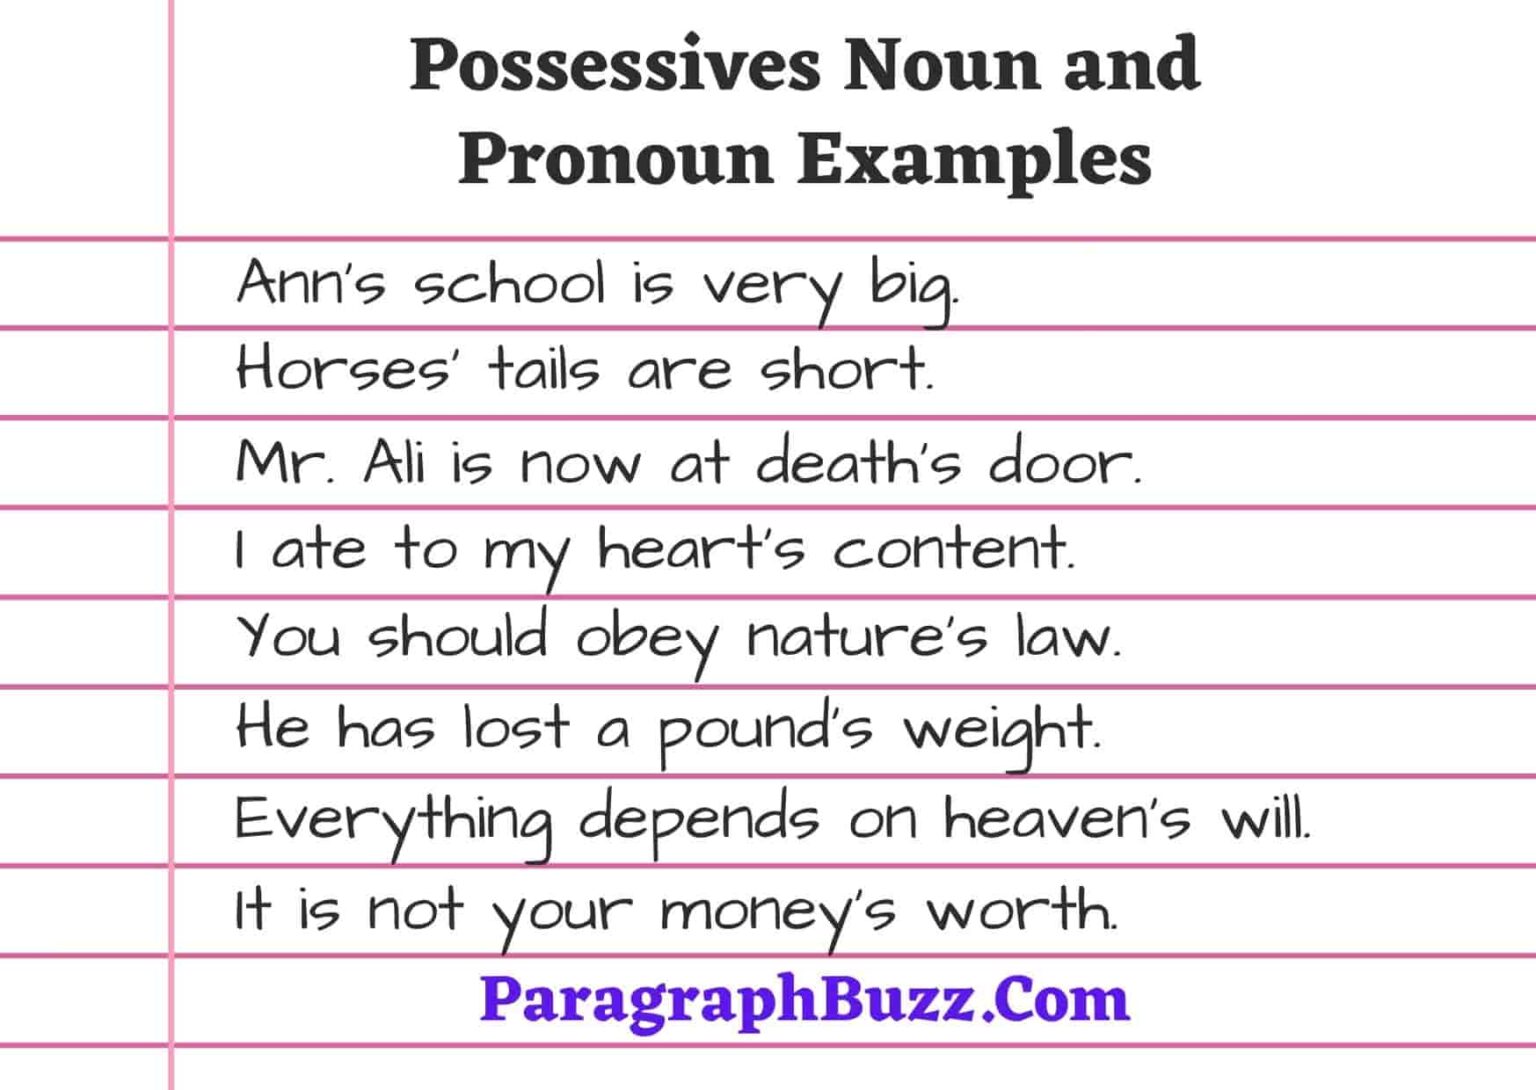 Noun pronoun. But for Noun/pronoun примеры. Noun pronoun example. Sentences for possessive pronouns.